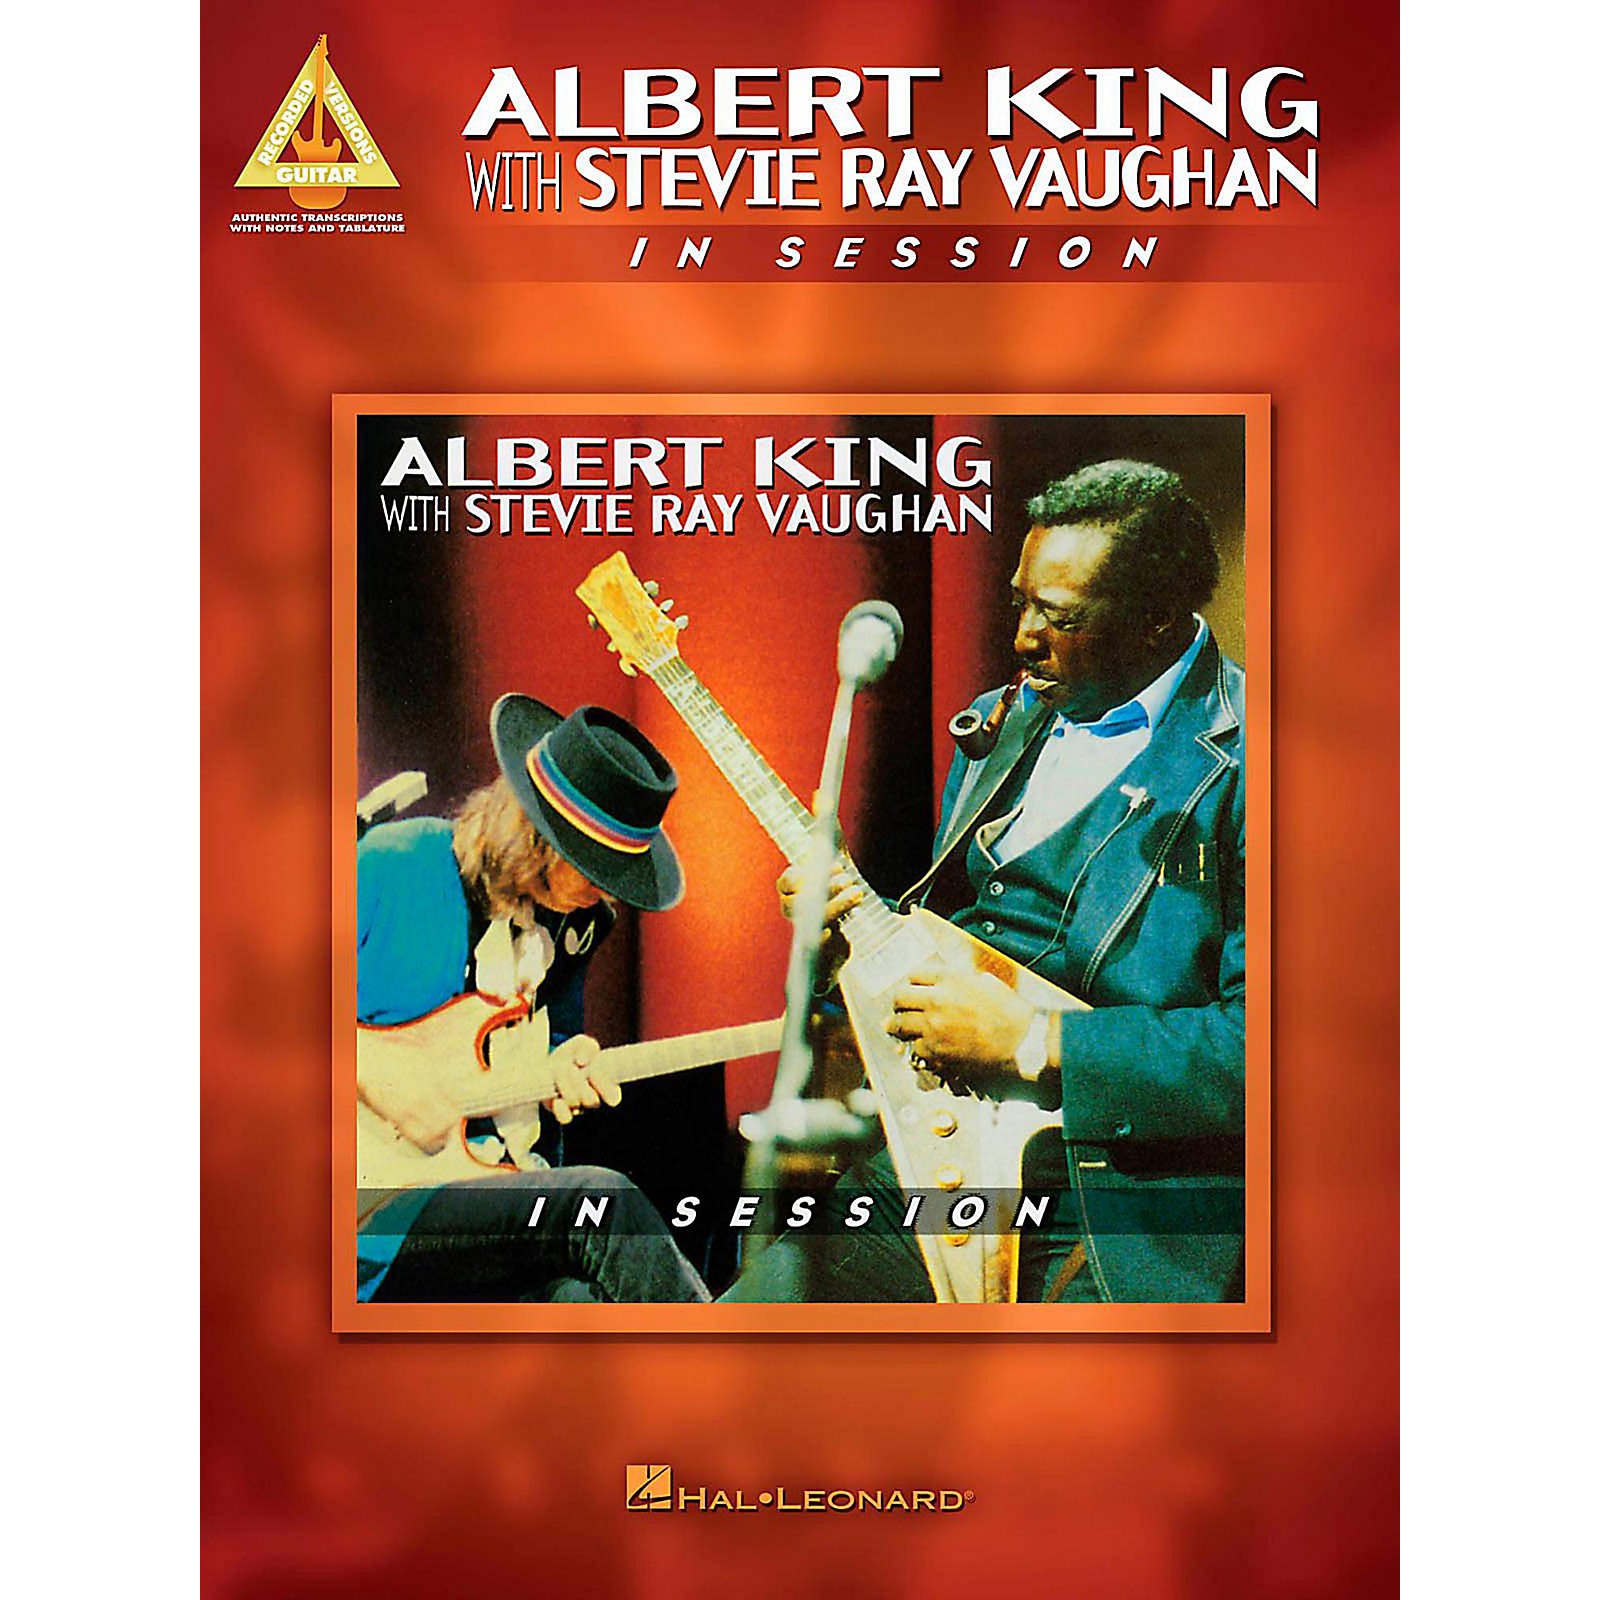 Hal Leonard Hal Leonard Albert King With Stevie Ray Vaughan - In Session  Guitar Tab Songbook